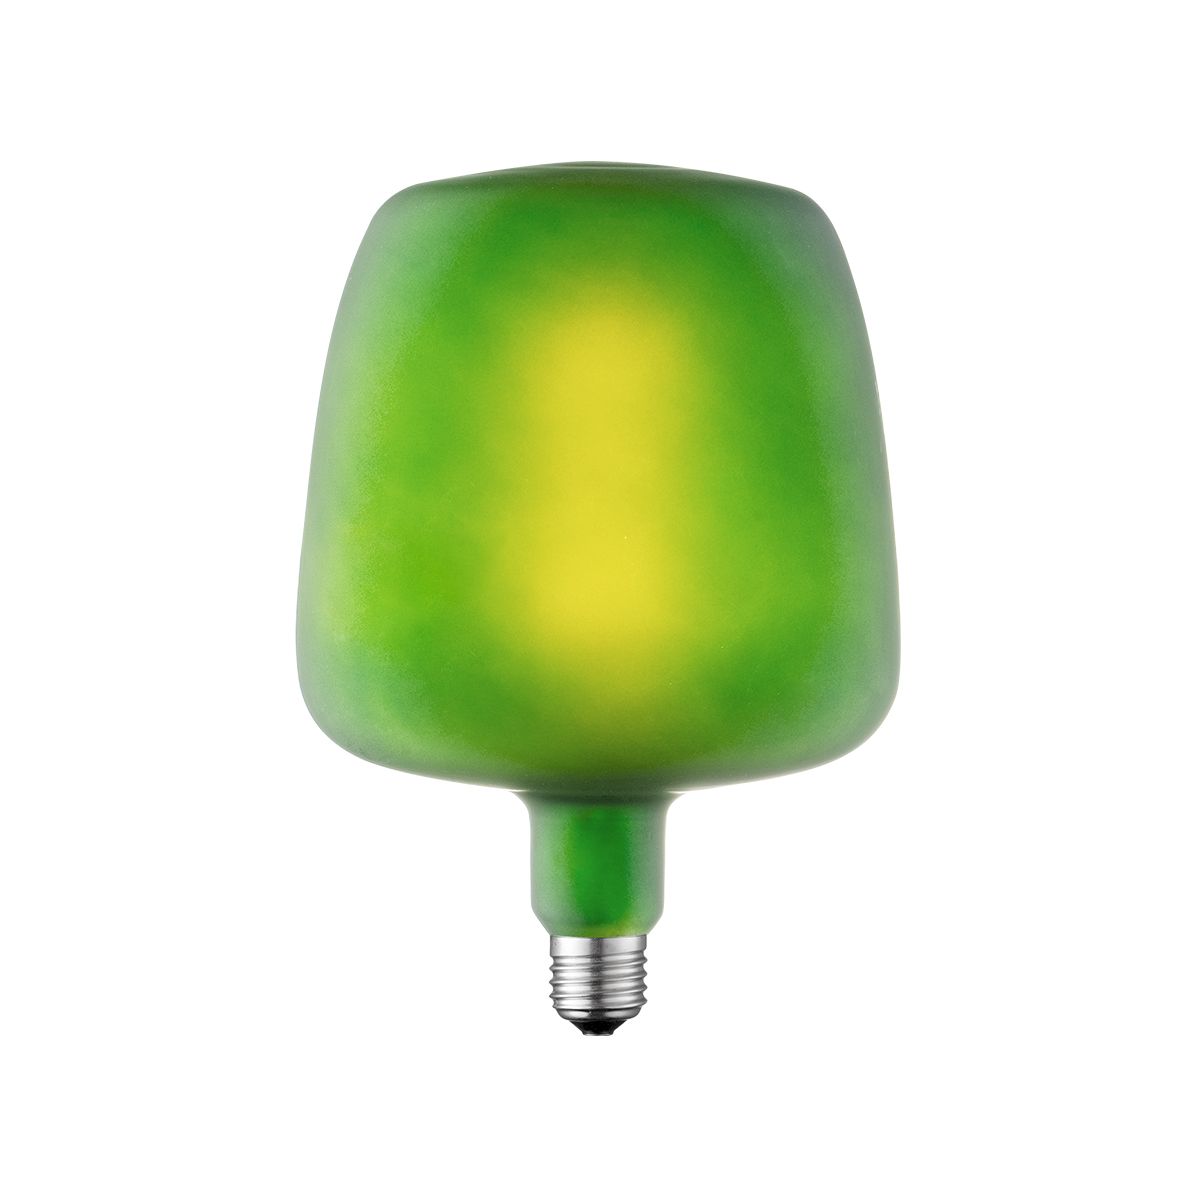 Tangla lighting - TLB-9003-04GN - LED Light Bulb Single Spiral filament - 4W green opal - large - non dimmable - E27